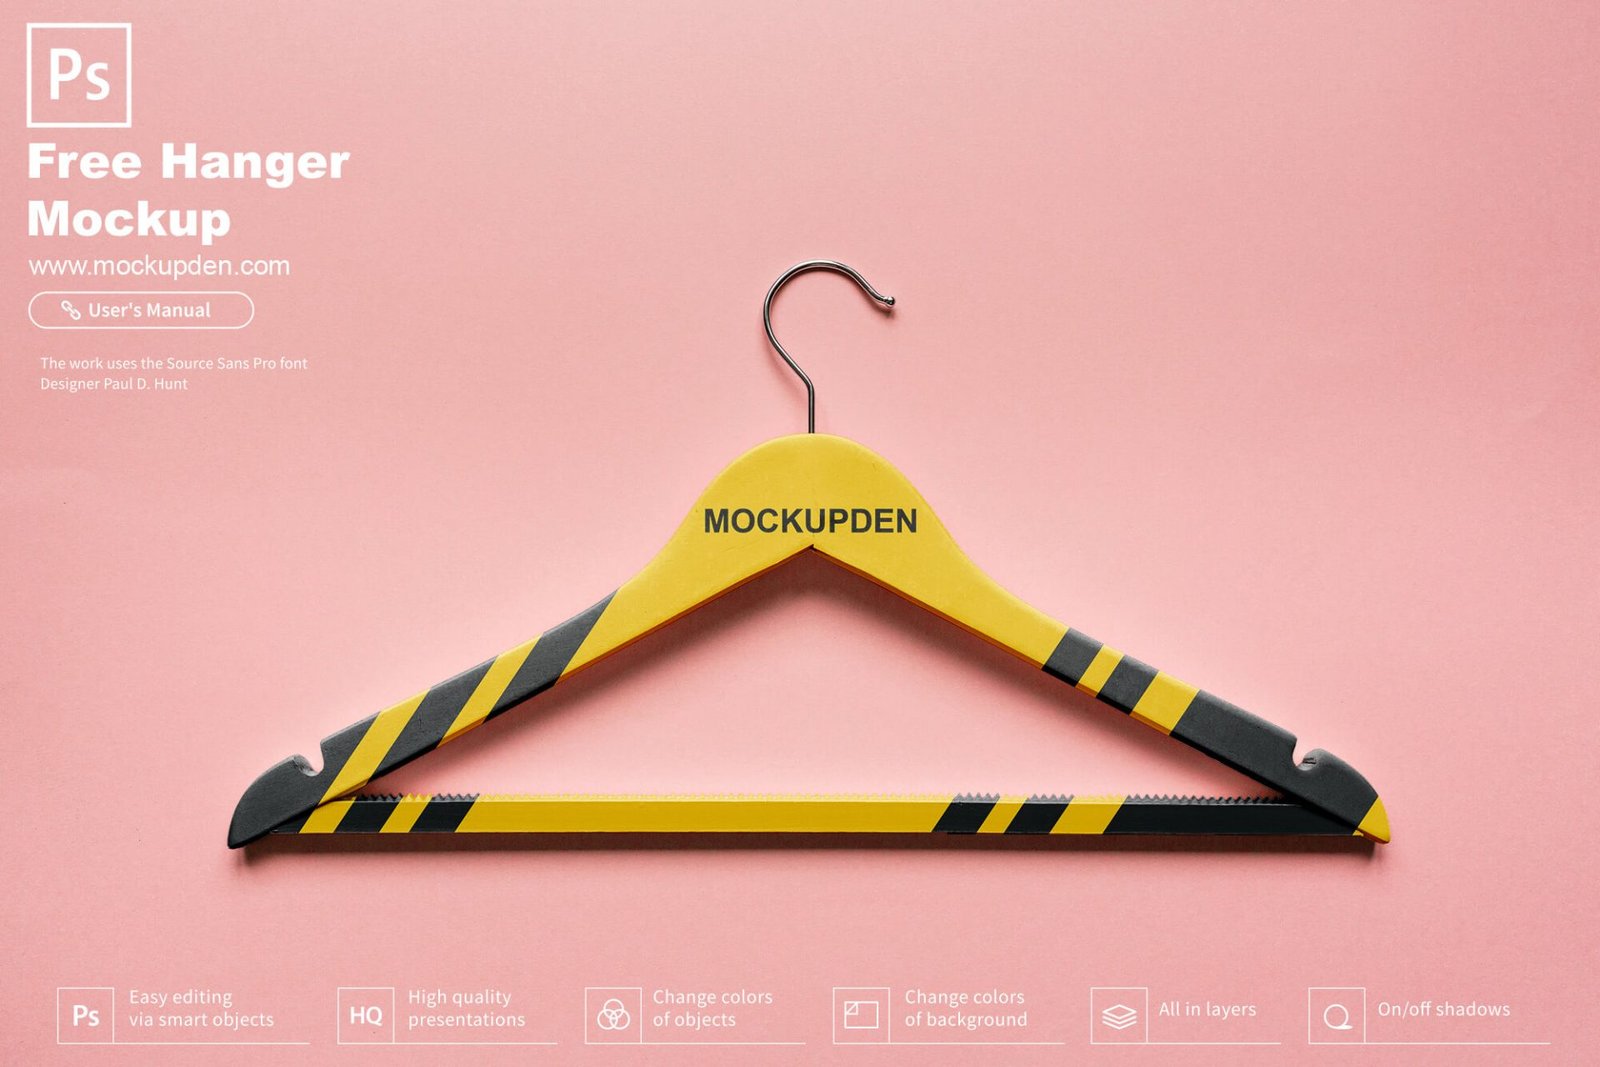 Download Hanger Mockup | 31+ Free & Premium Hanger PSD Templates 2020